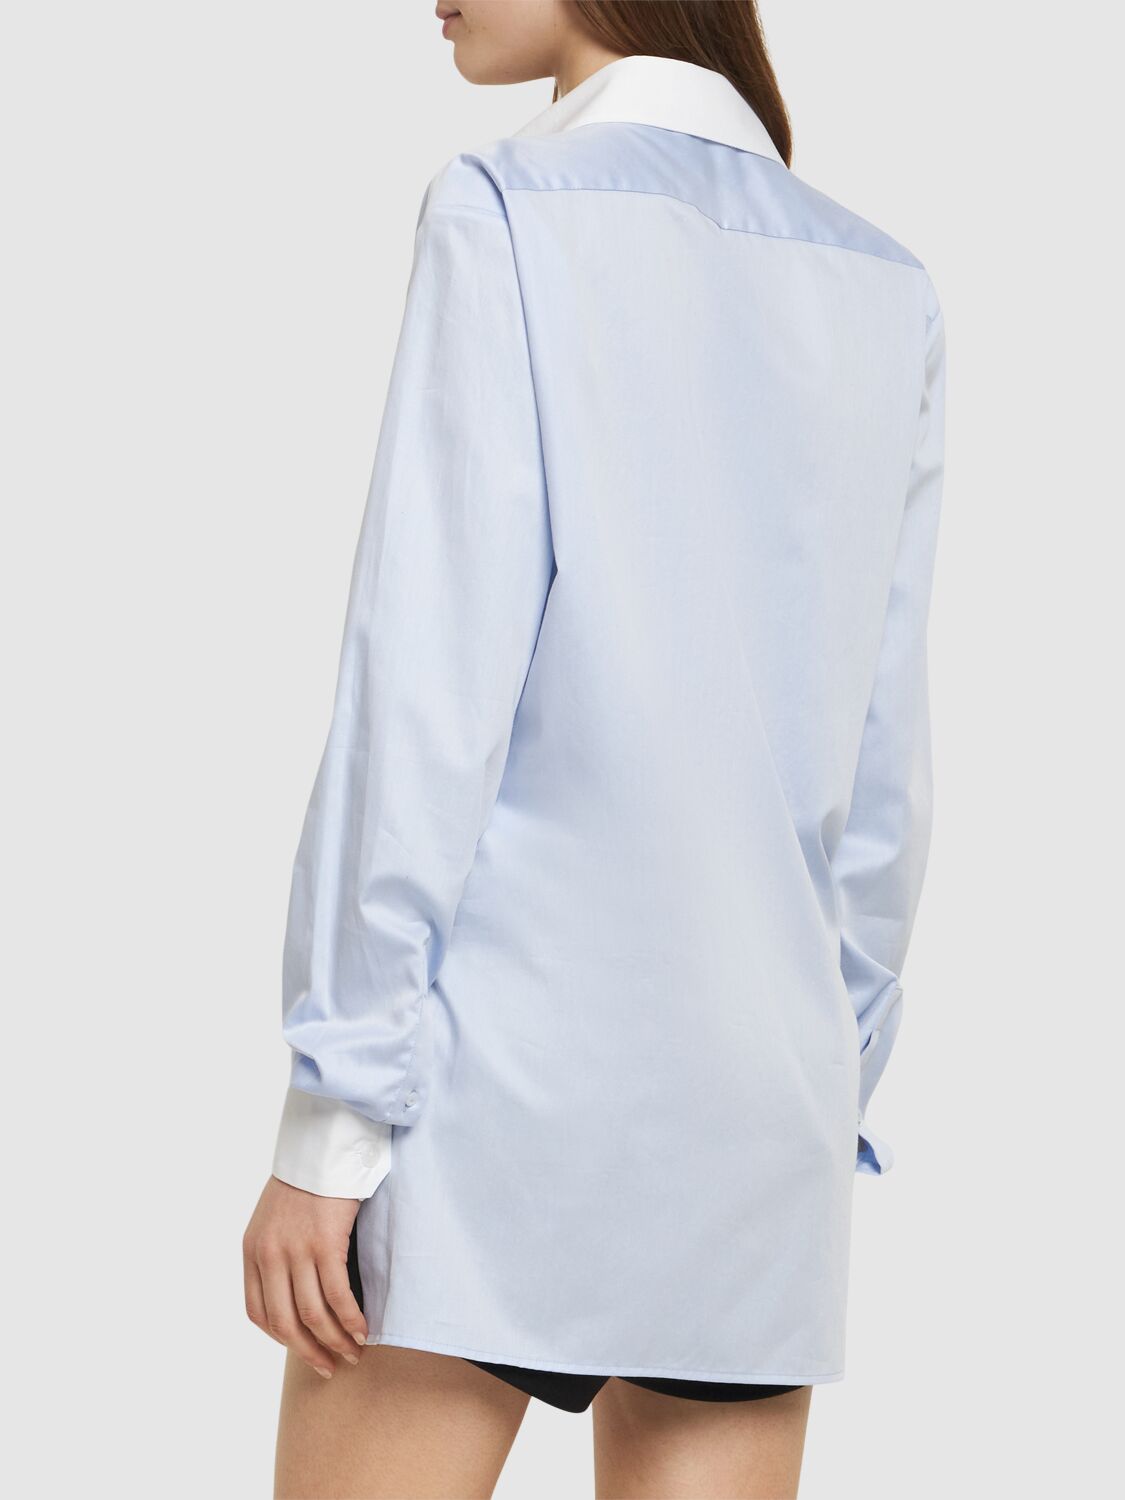 Shop 16arlington Teverdi Poplin Shirt In Light Blue,white